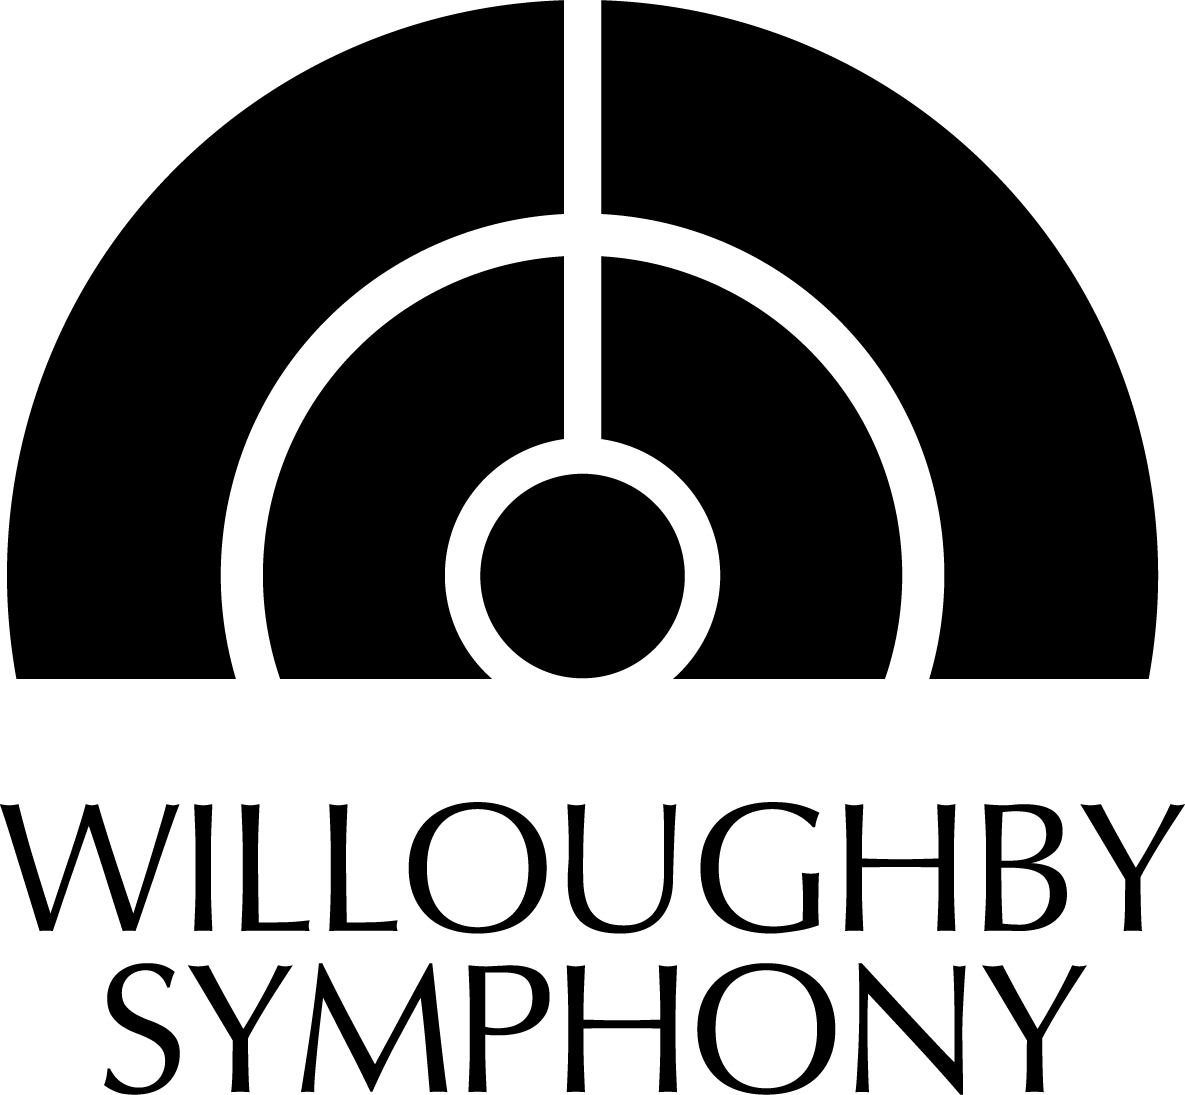 Will_Symphony-logo-black_600dpi.png